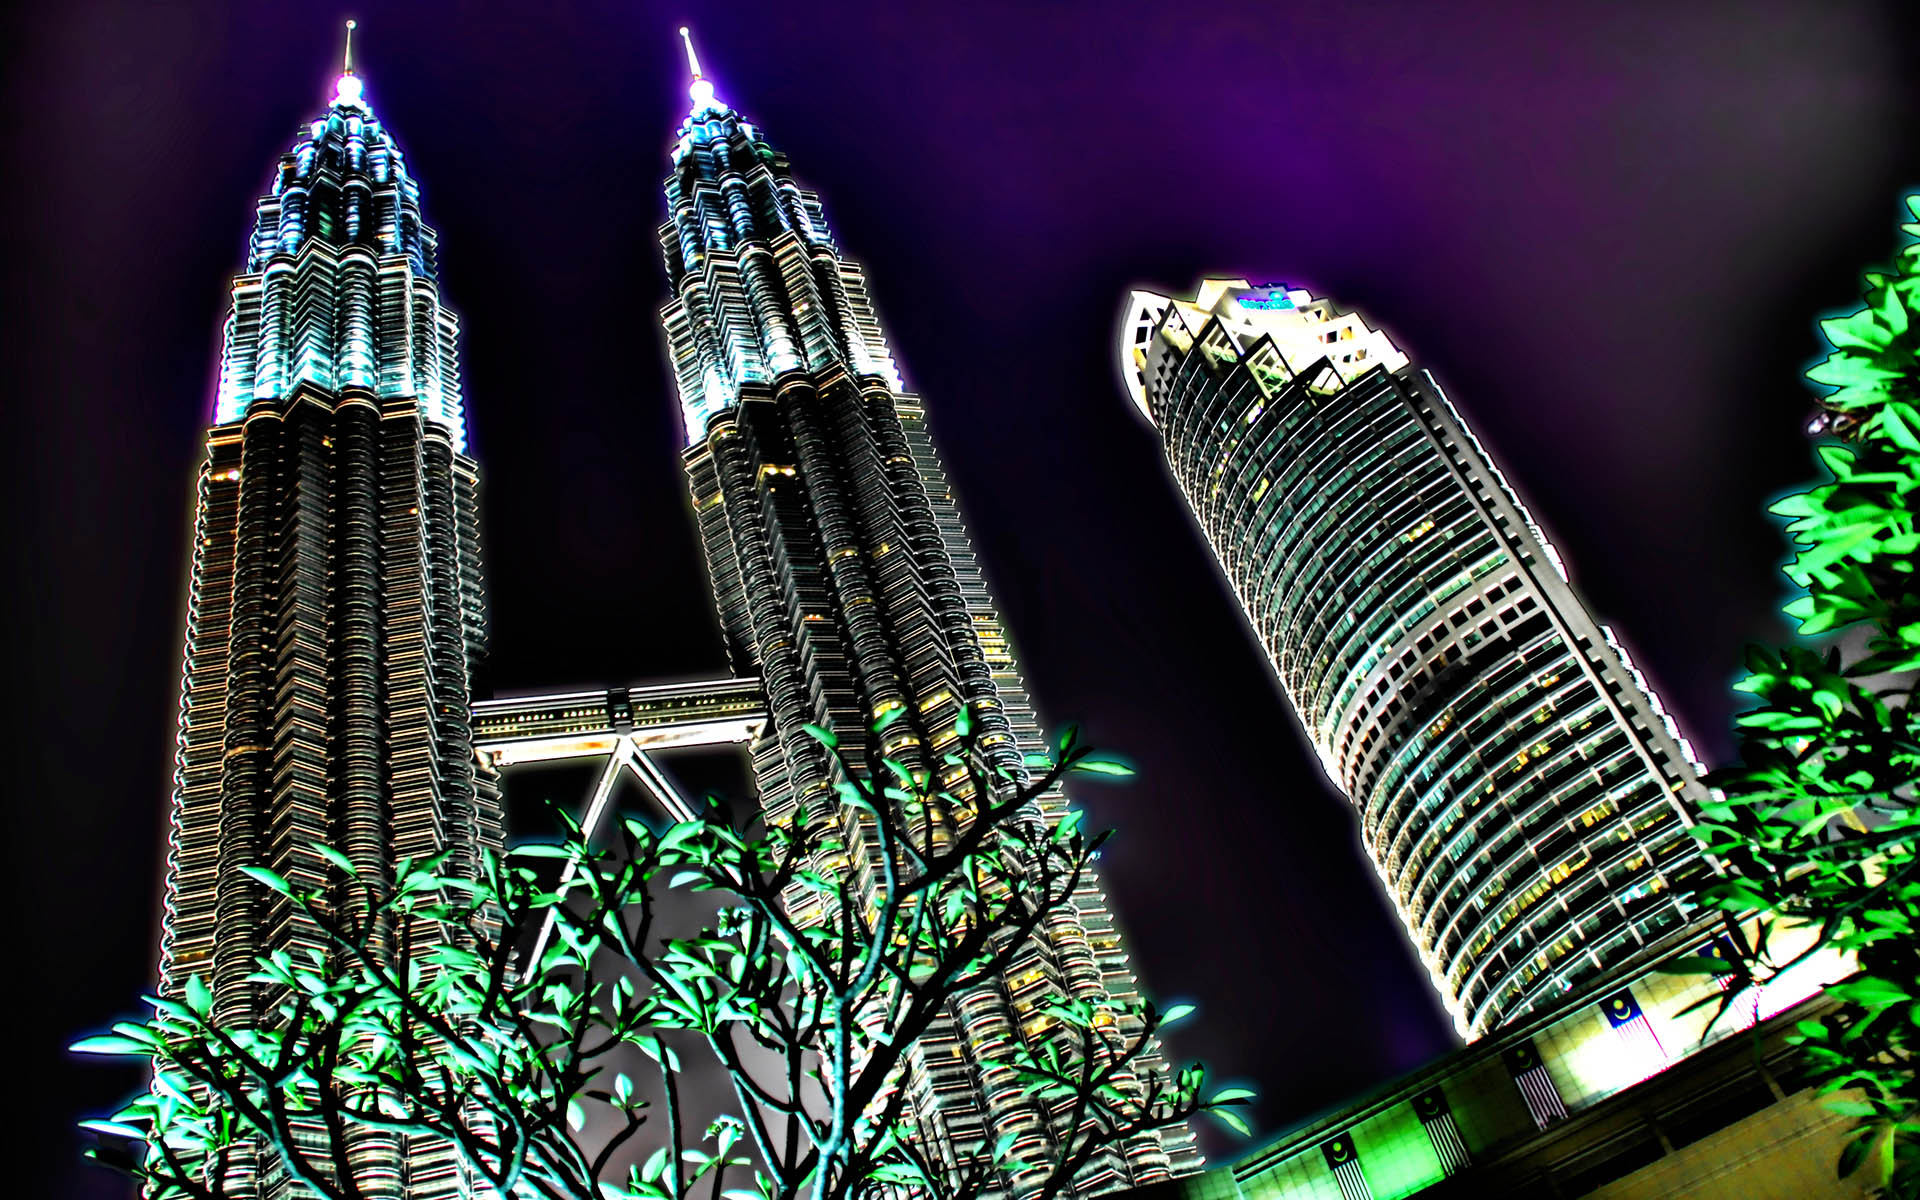 Petronas Towers Desktop Wallpaper For HD Widescreen And